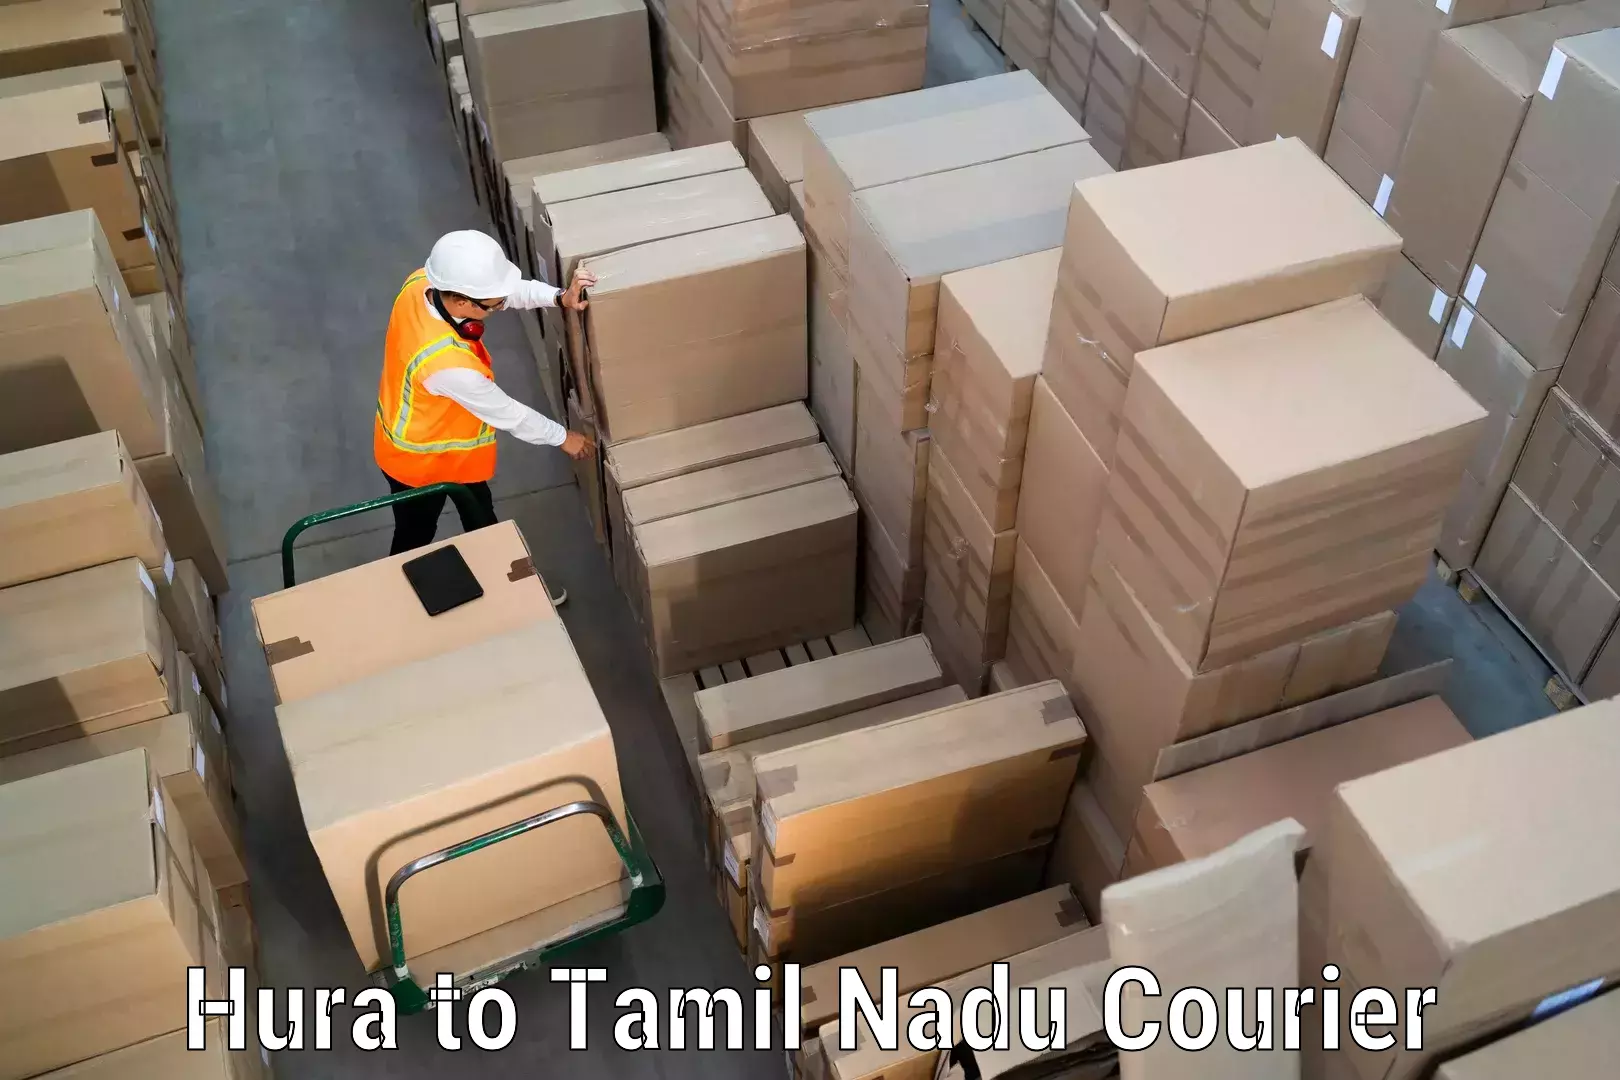 Efficient order fulfillment Hura to Tamil Nadu